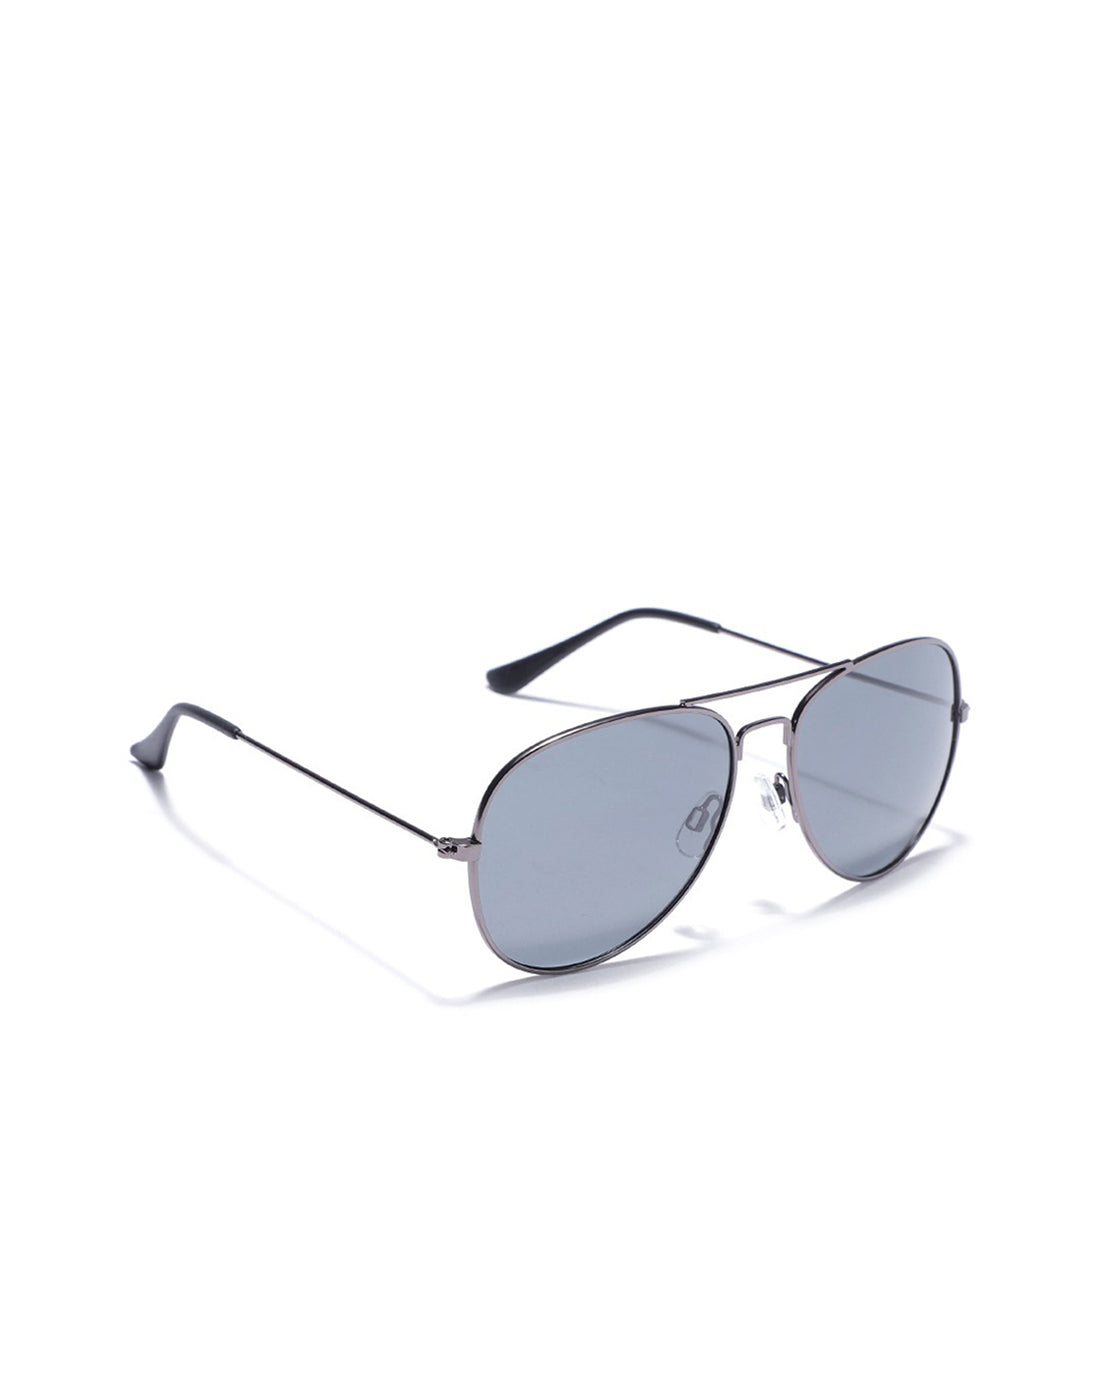 Carlton London Aviator Sunglasses with UV Protected Lens For Men